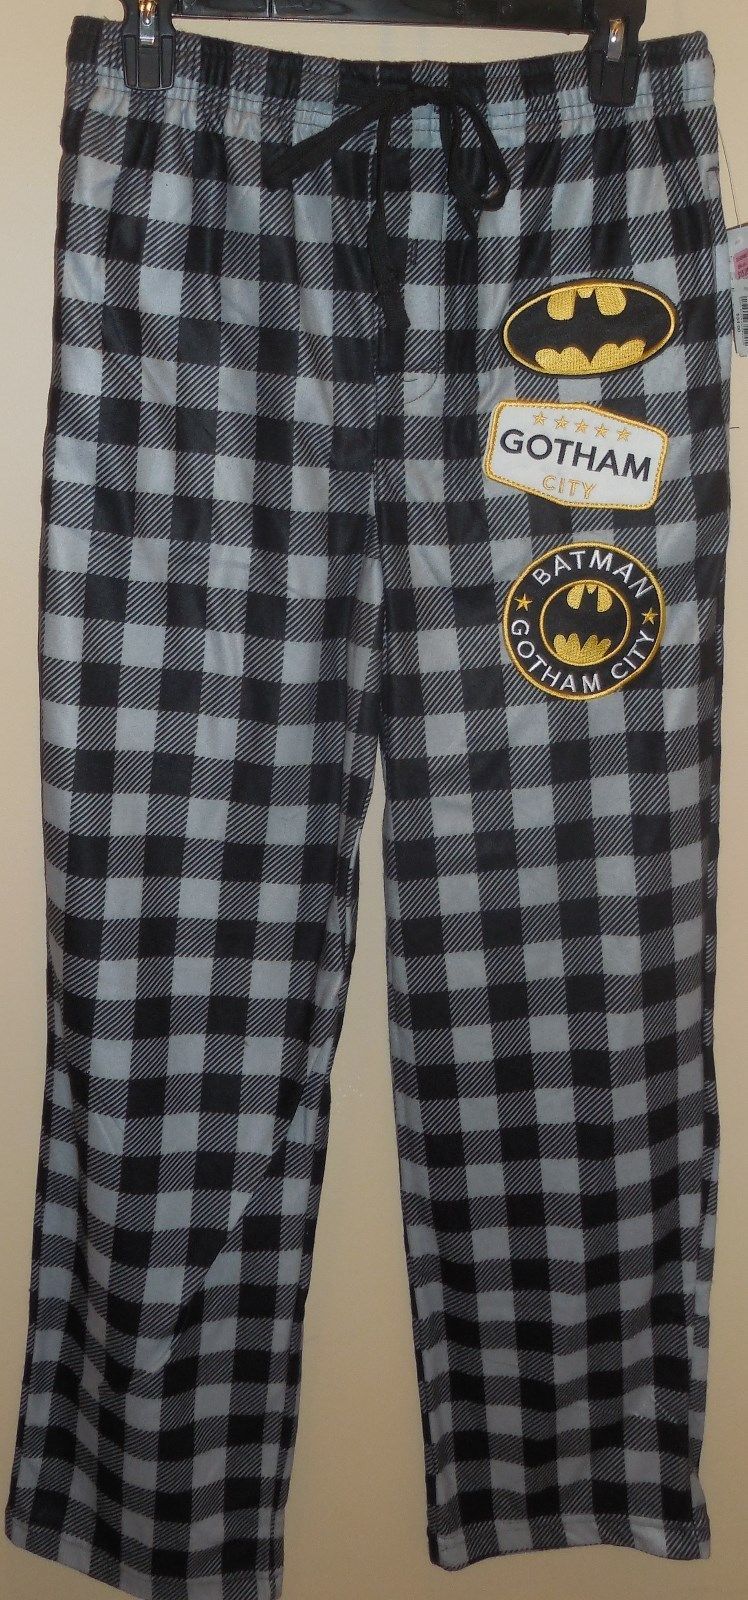 DC Comics Mens Batman Pajama Pants Classic Bat Logo Loungewear Sleep Pants